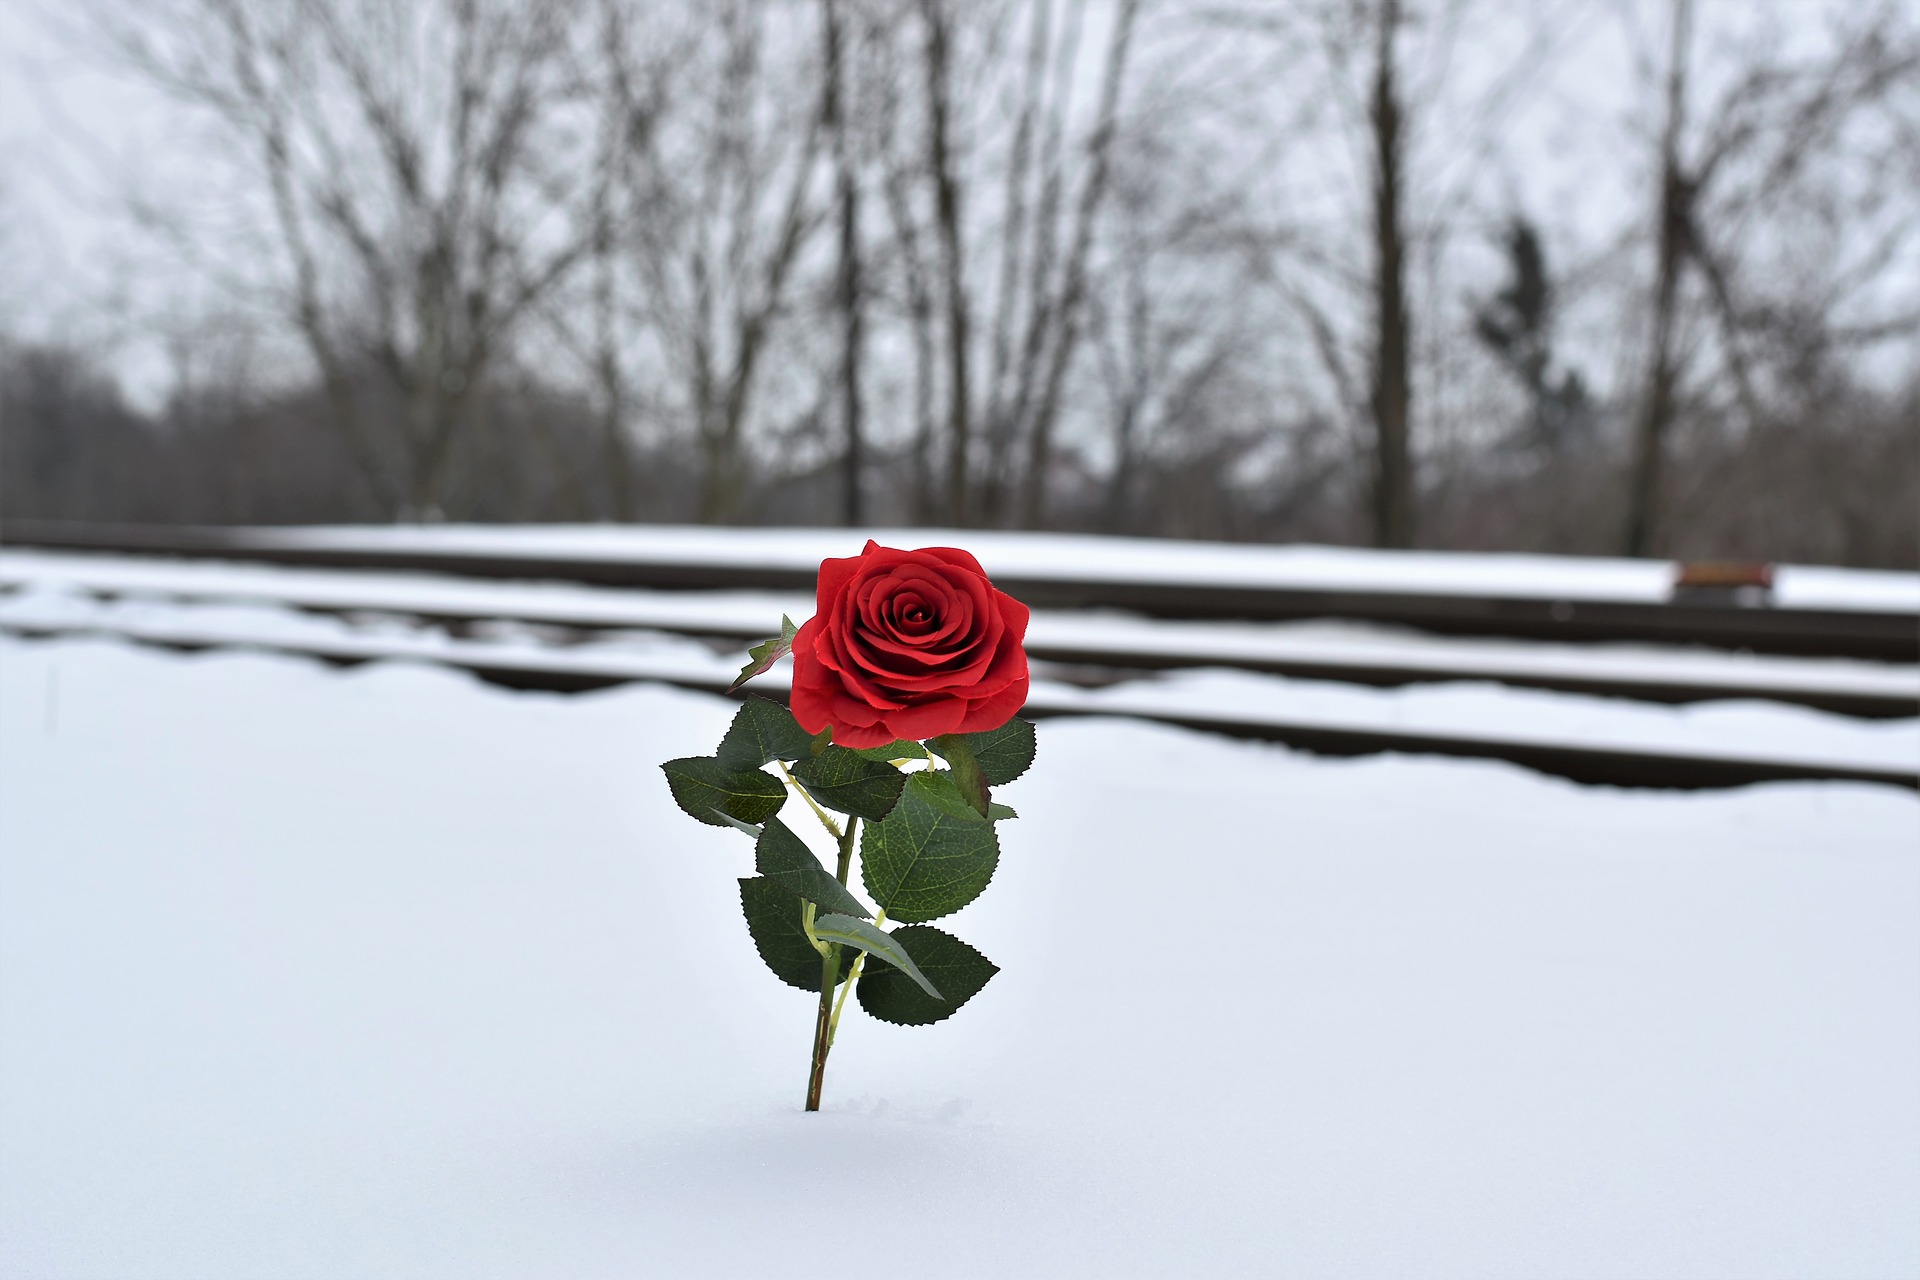 https://pixabay.com/en/red-rose-in-snow-love-symbol-railway-3198661/